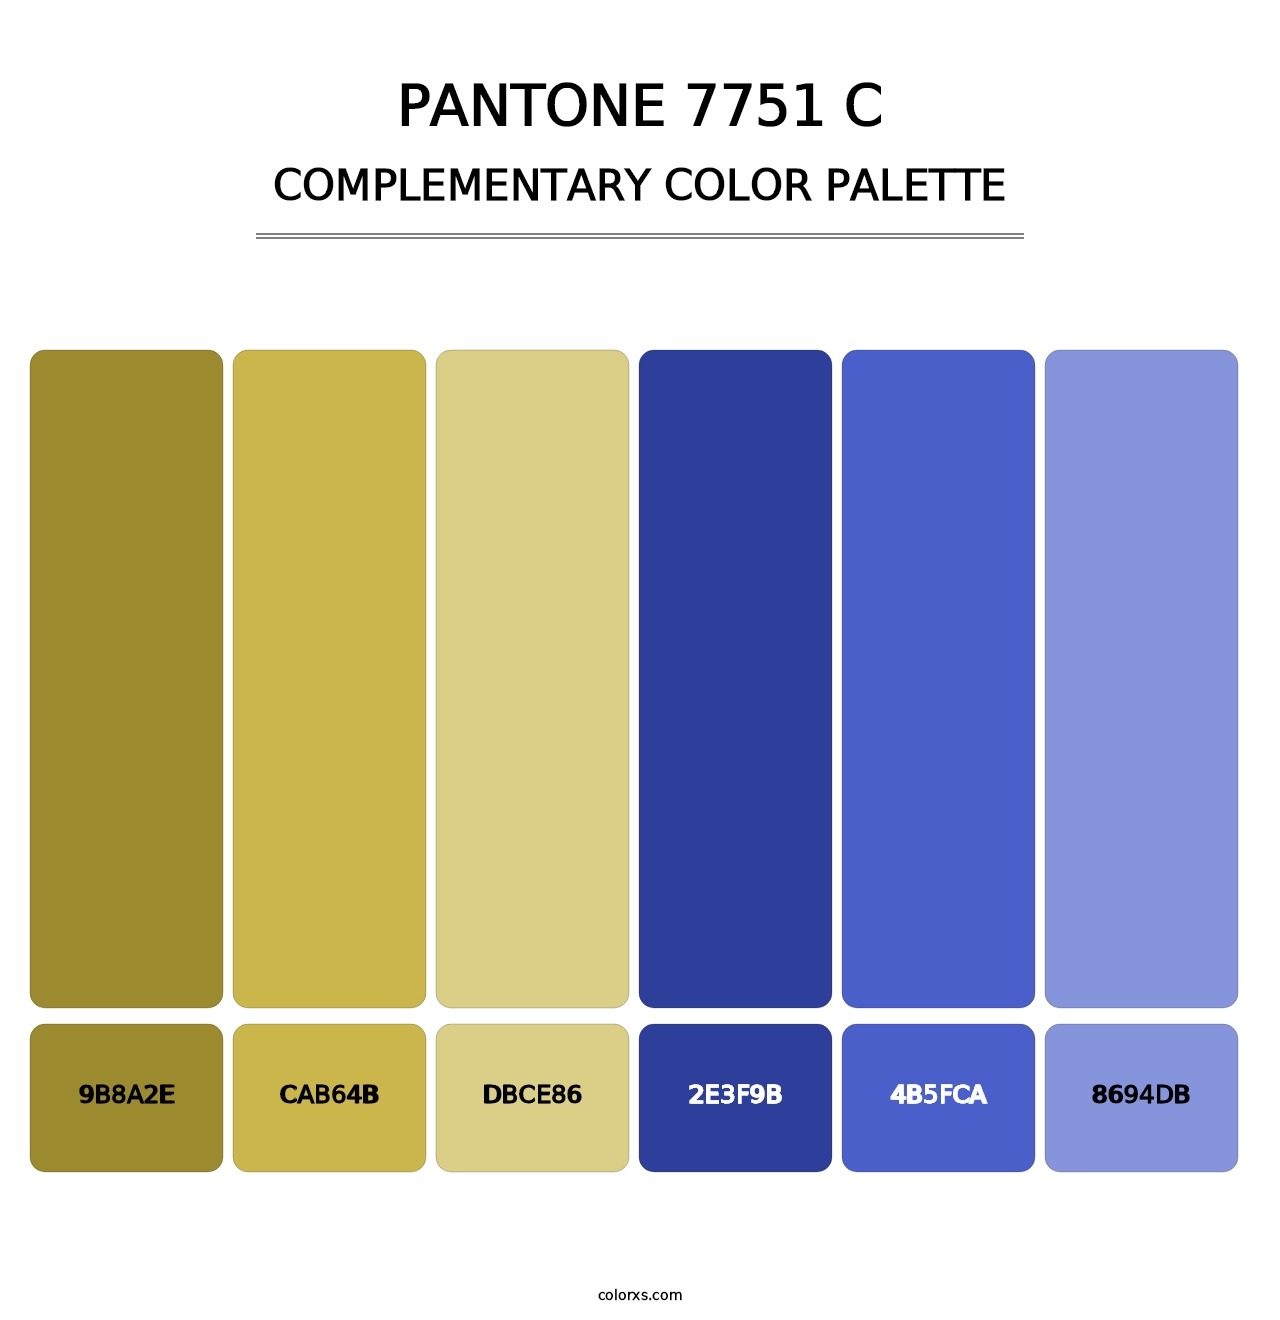 PANTONE 7751 C - Complementary Color Palette